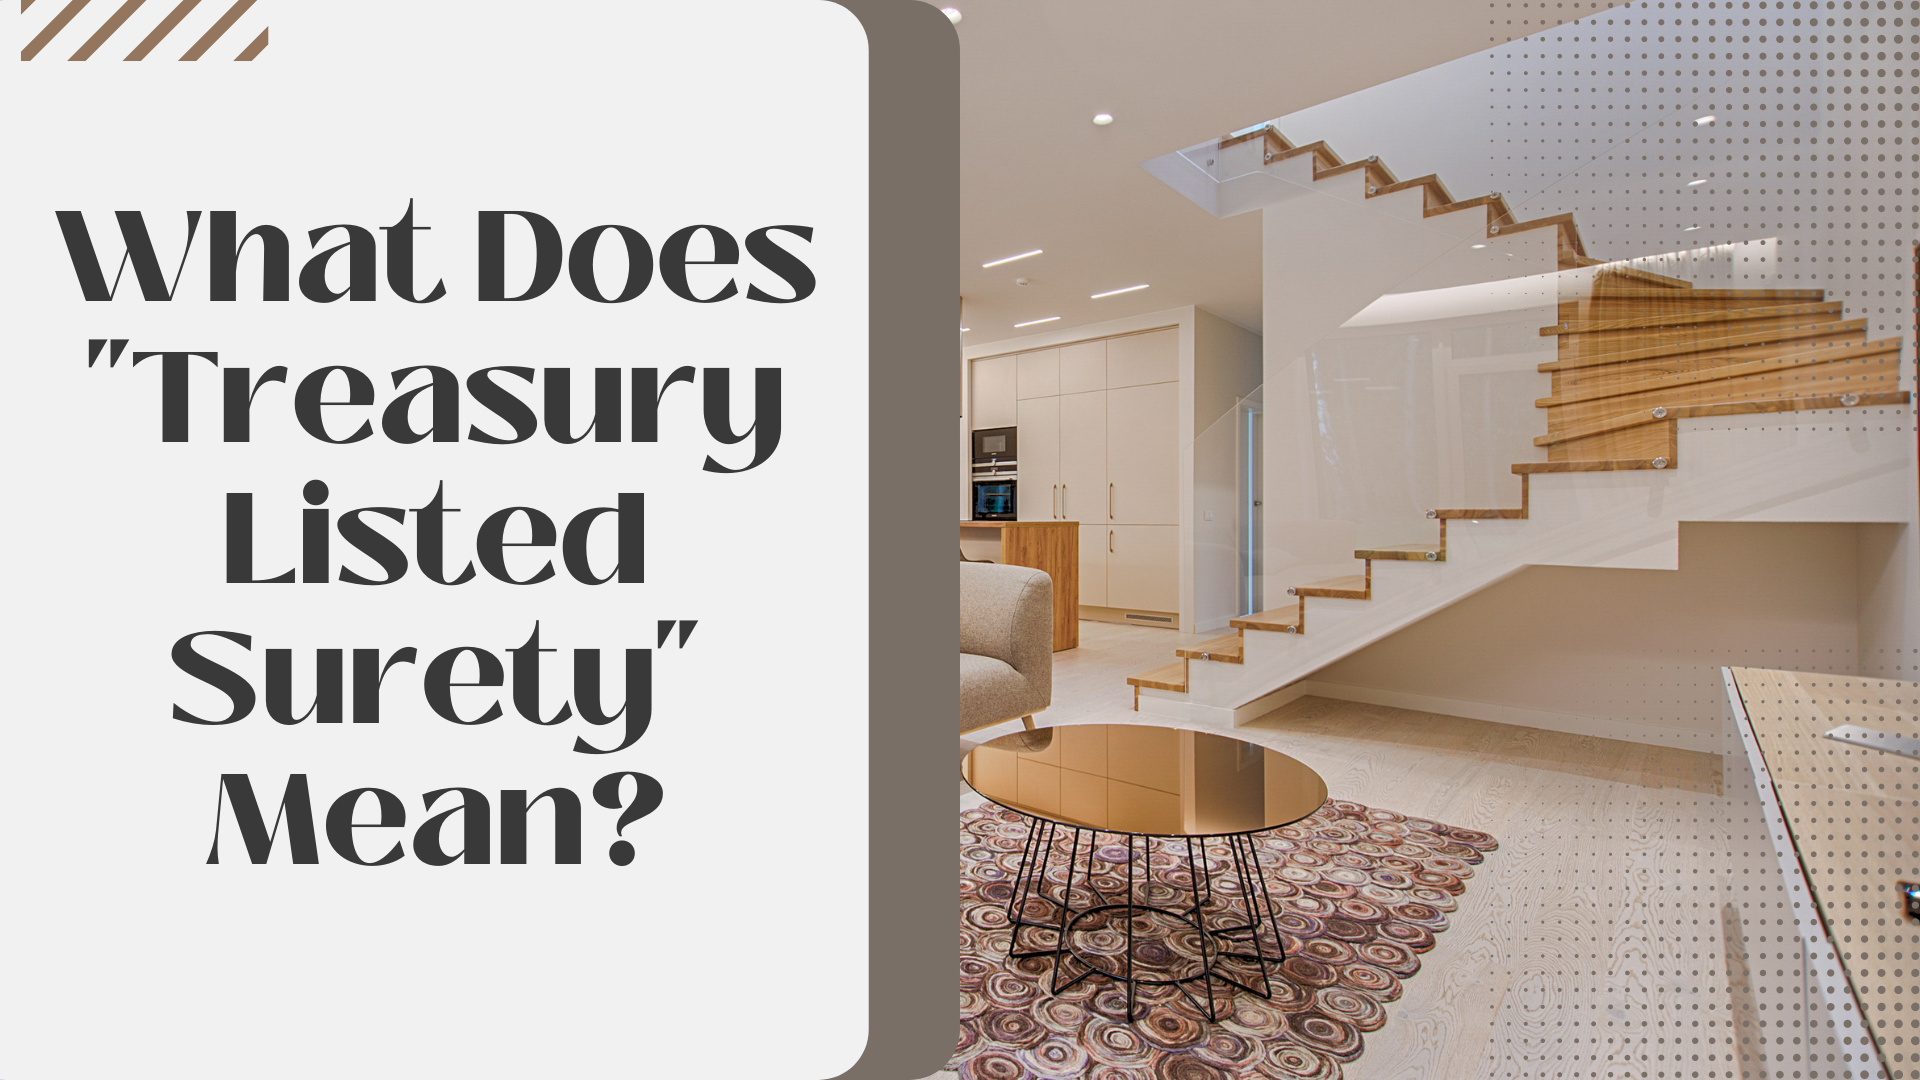 surety bond - How Does Treasury Listing Process Impact Surety Bonds Buyers - minimalist home